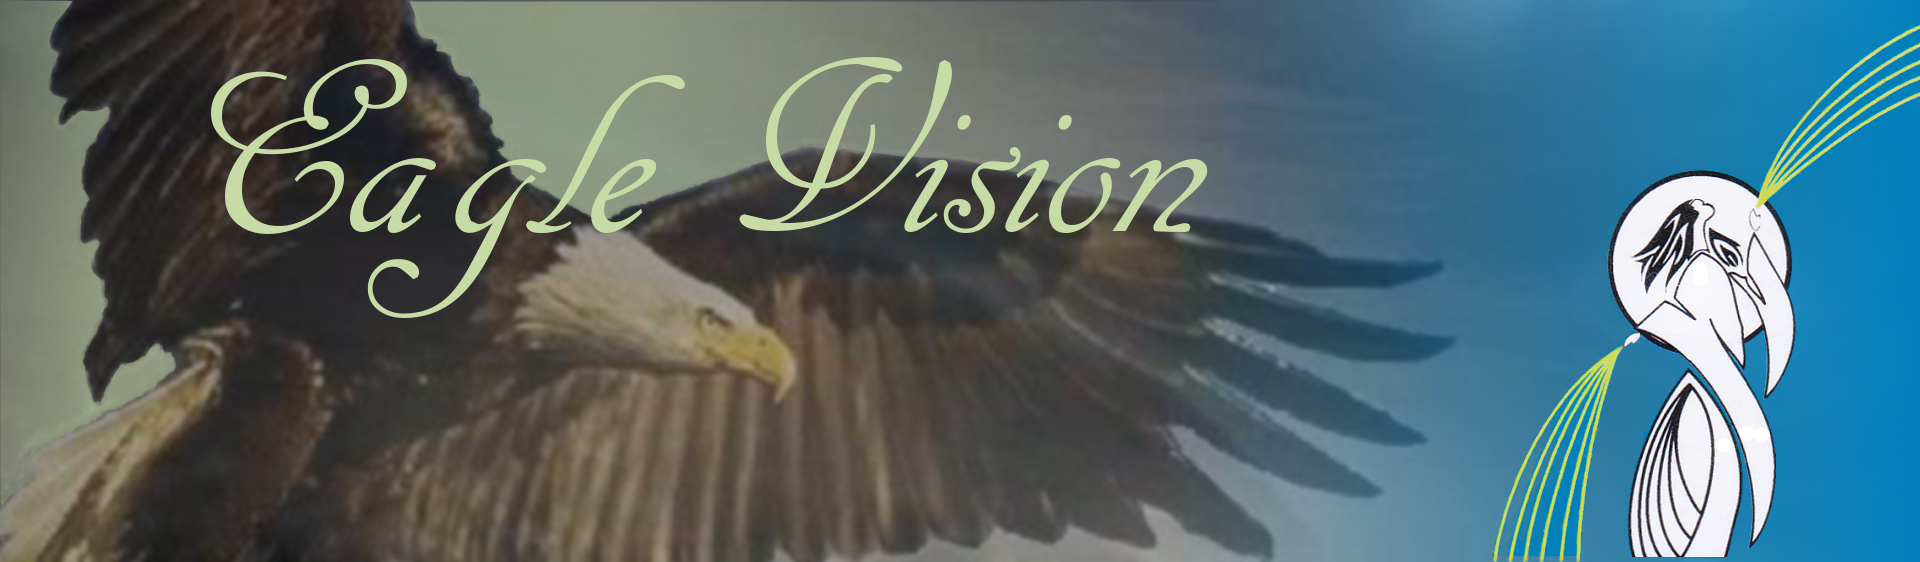 Eagle Vision Shamanic Healing